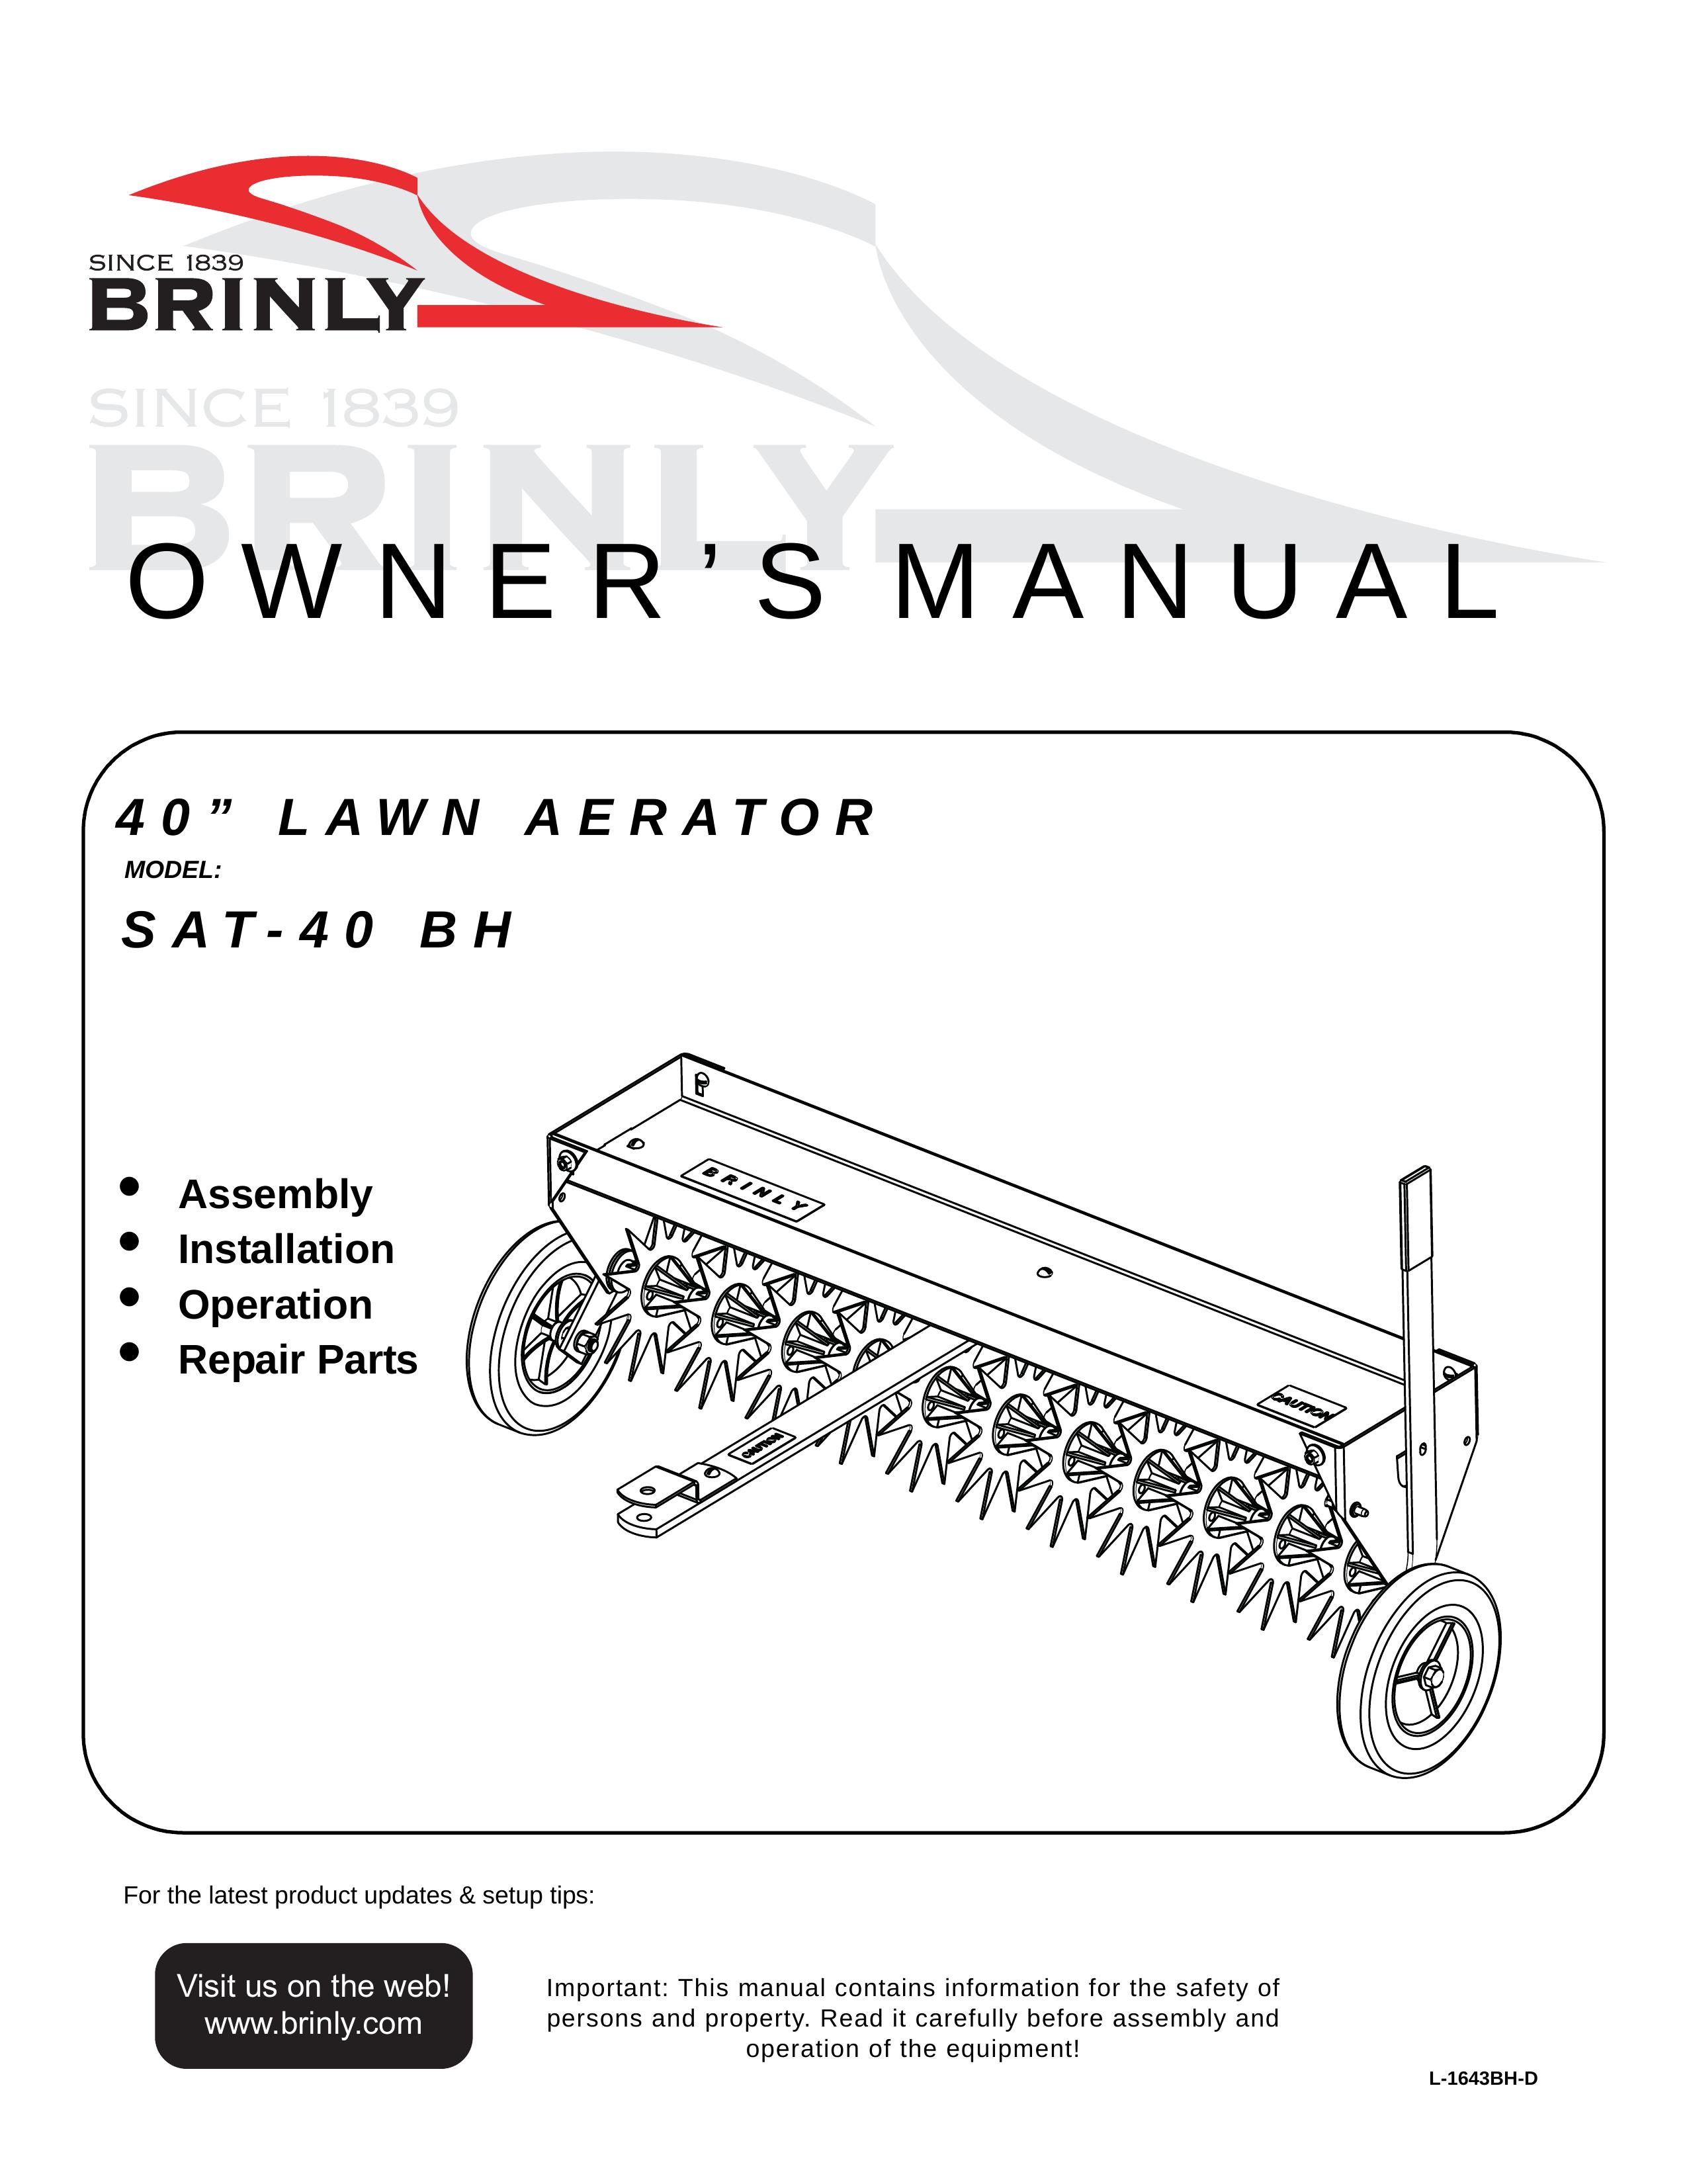 Sears S A T - 4 0 B H Lawn Aerator User Manual